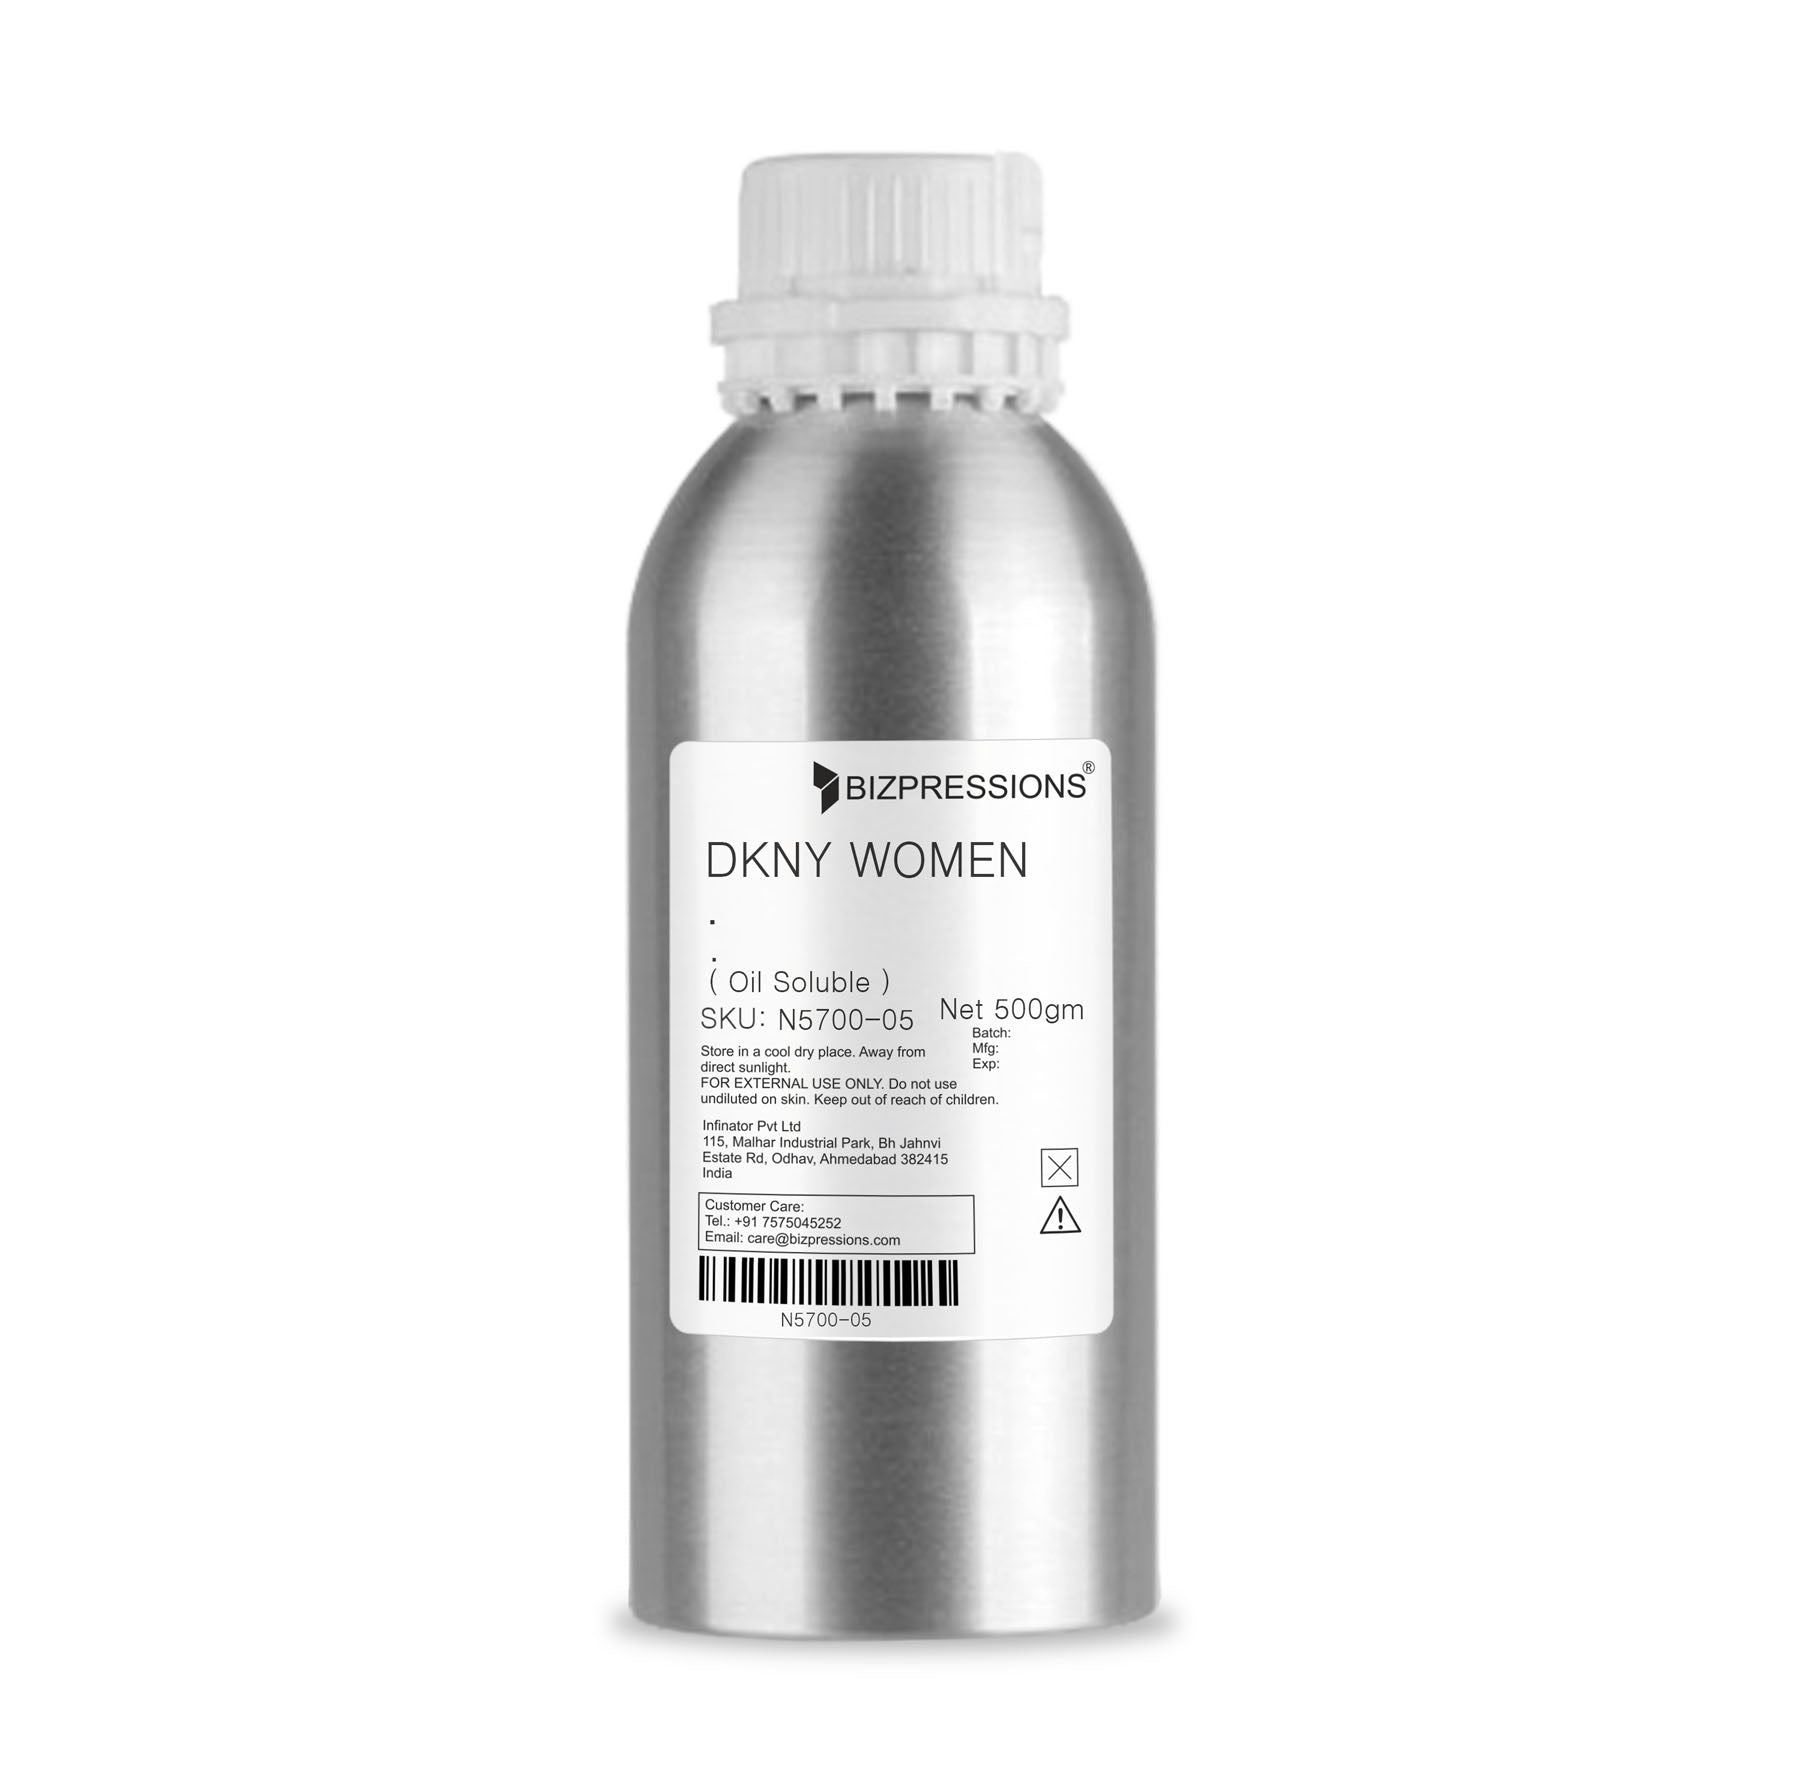 DKNY WOMEN - Fragrance ( Oil Soluble ) - 500 gm